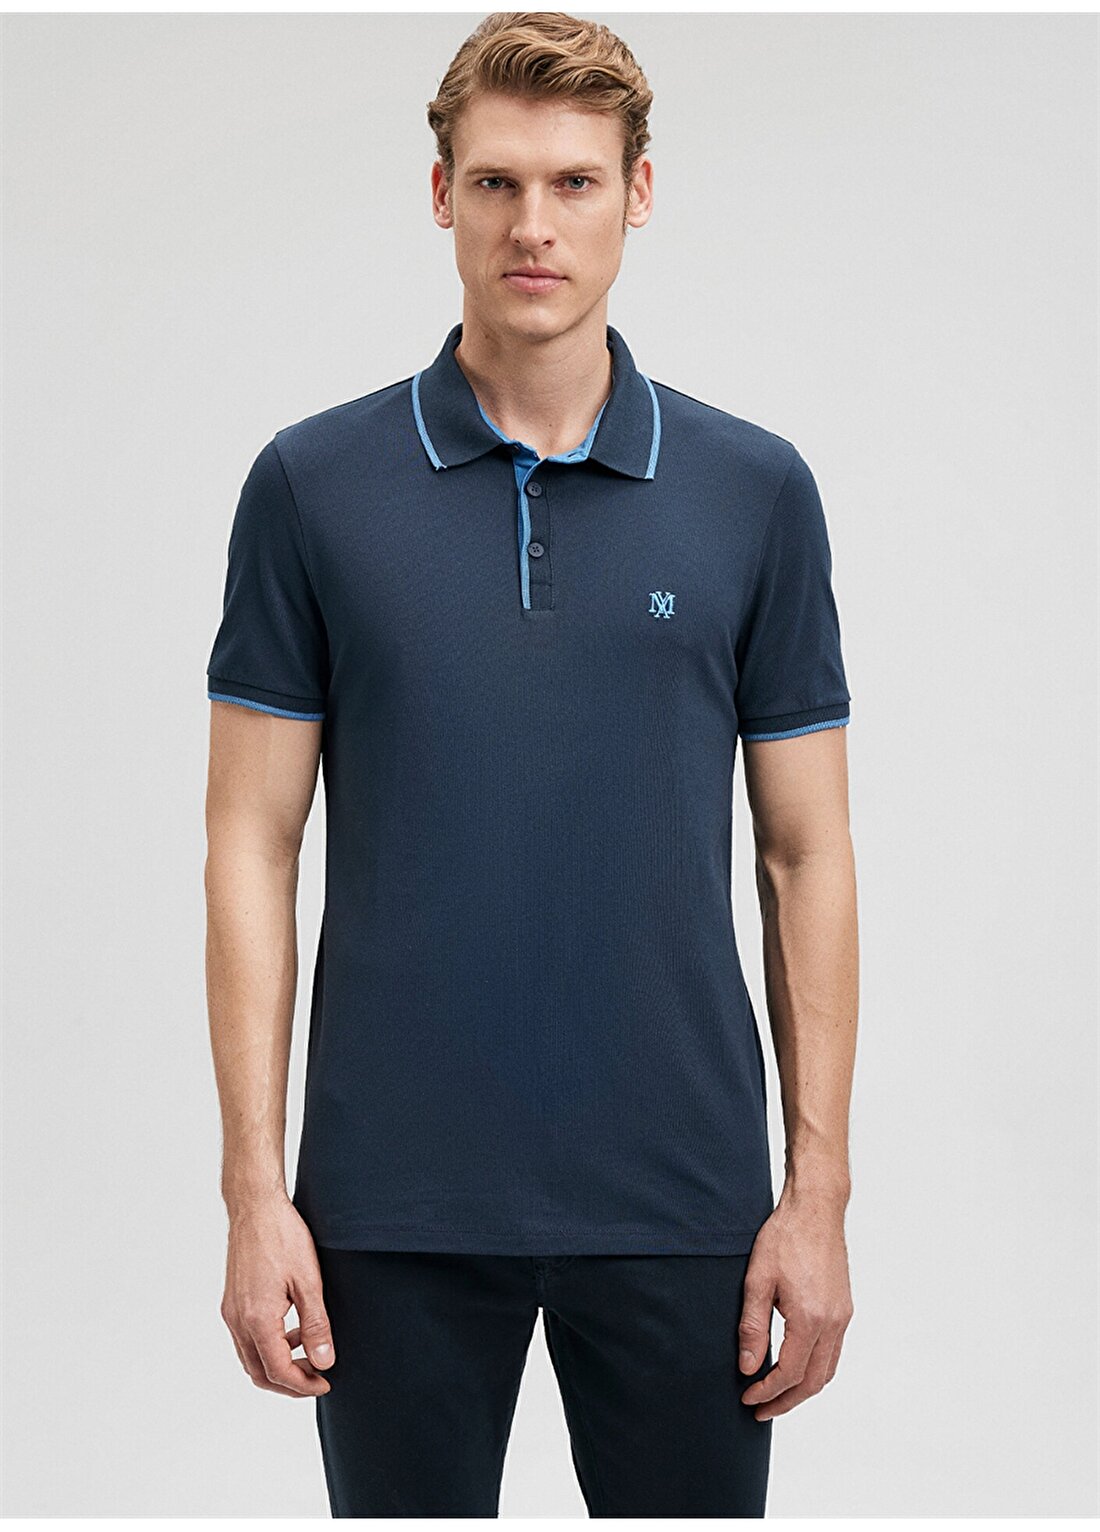 Mavi Koyu Lacivert Erkek Polo T-Shirt 062373-28417 POLO Gece Lacivert